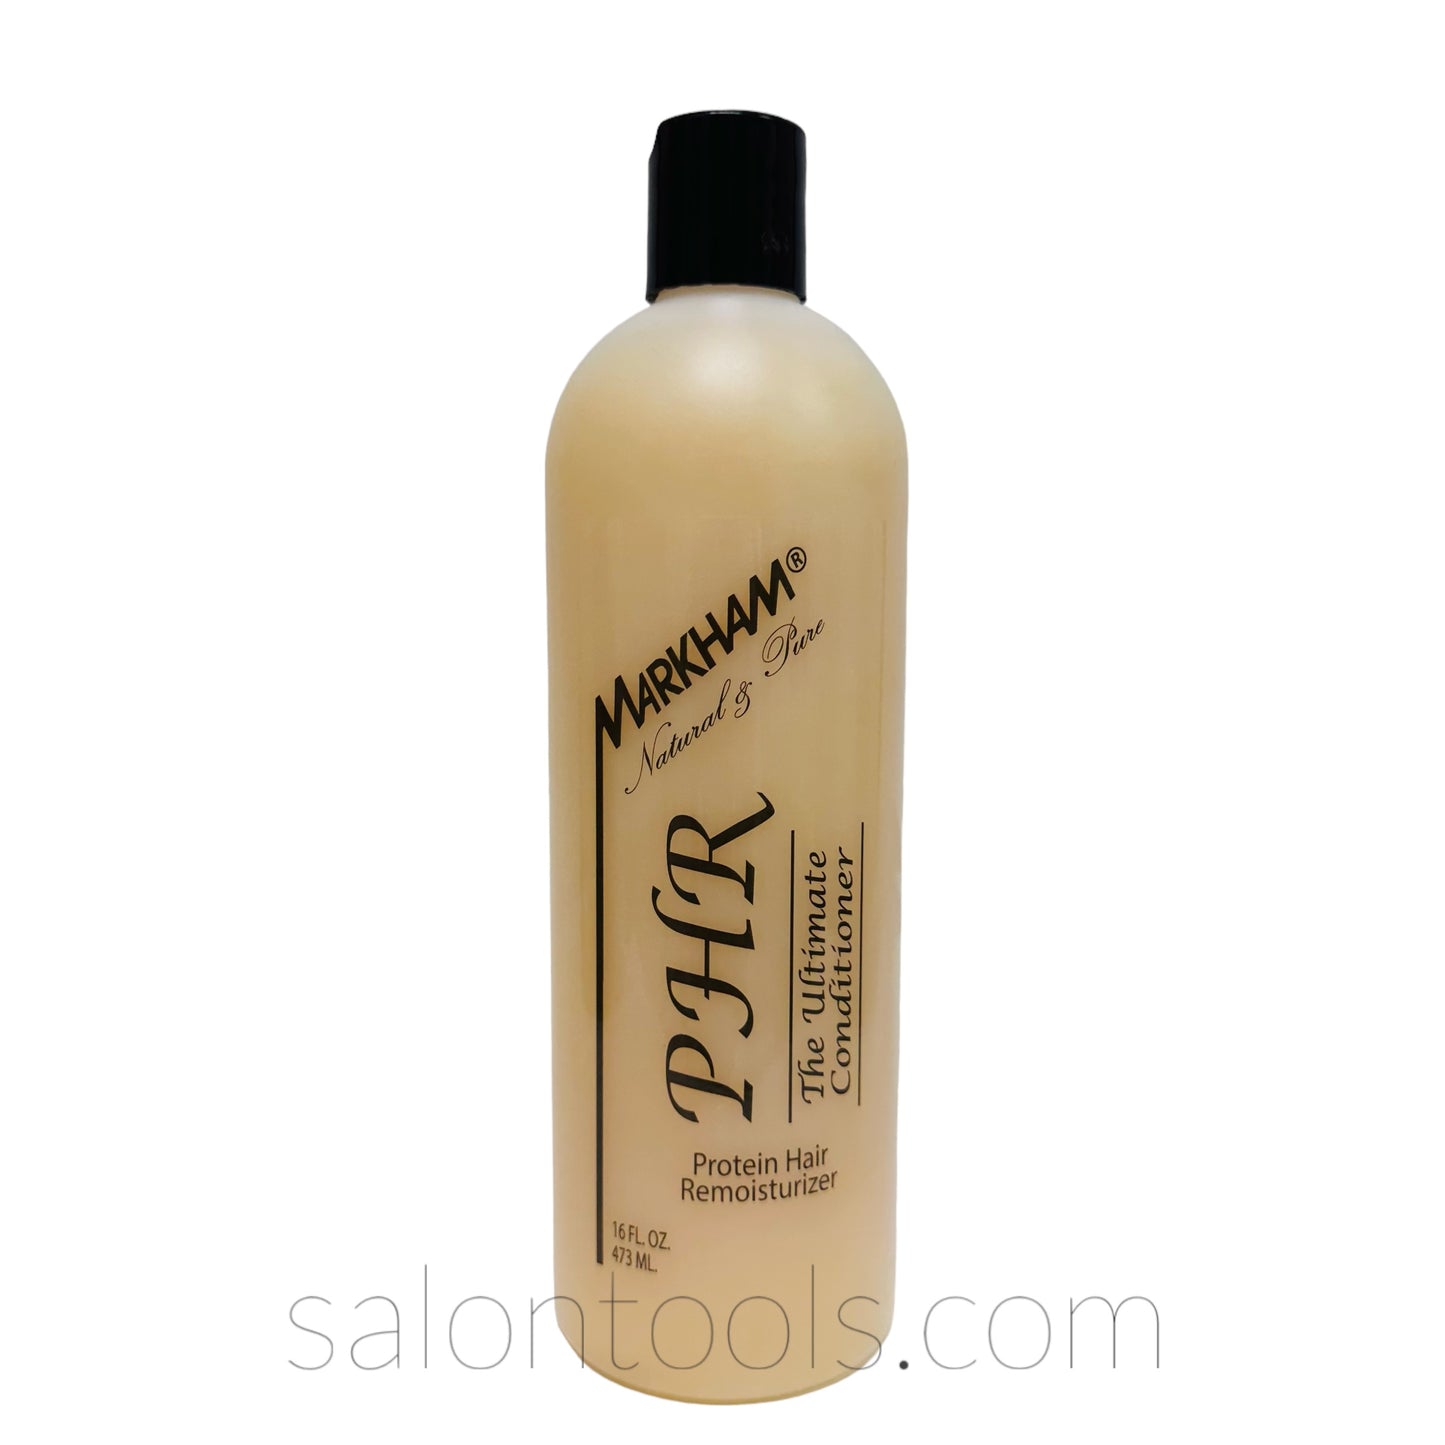 Markham PHR (Protein Hair Re-moisturizer) The Ultimate Conditioner 16oz